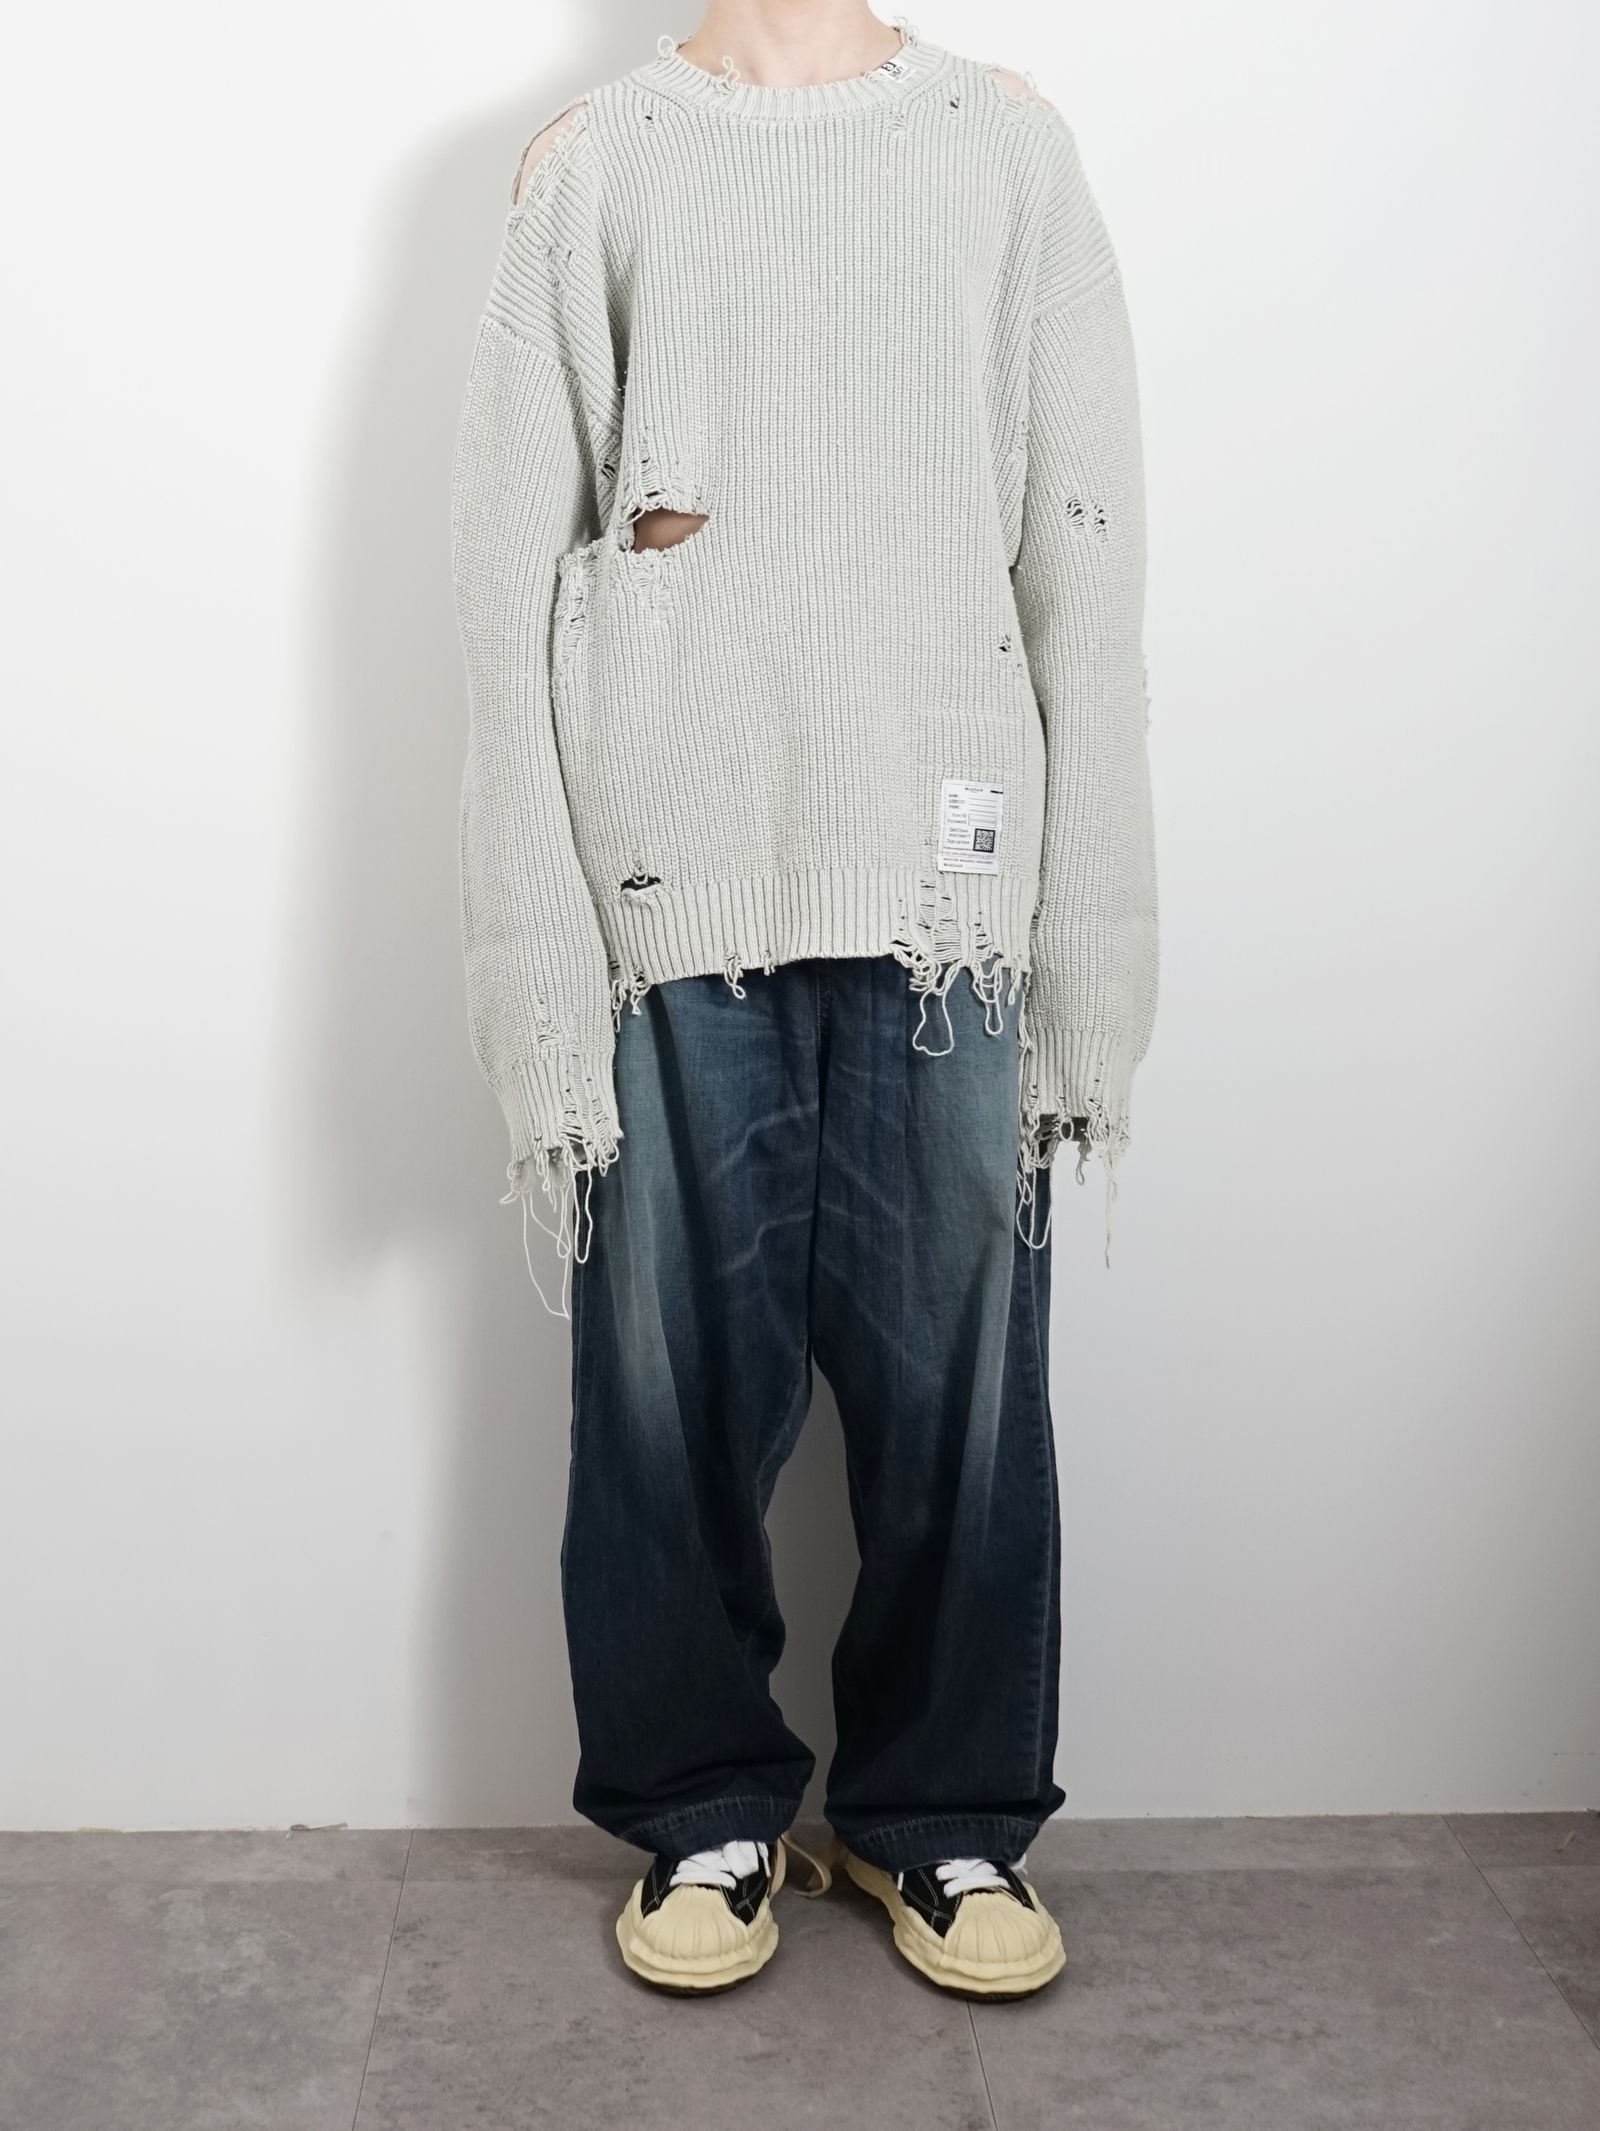 Maison MIHARA YASUHIRO - ブリーチドニットセーター - Bleached Knit 